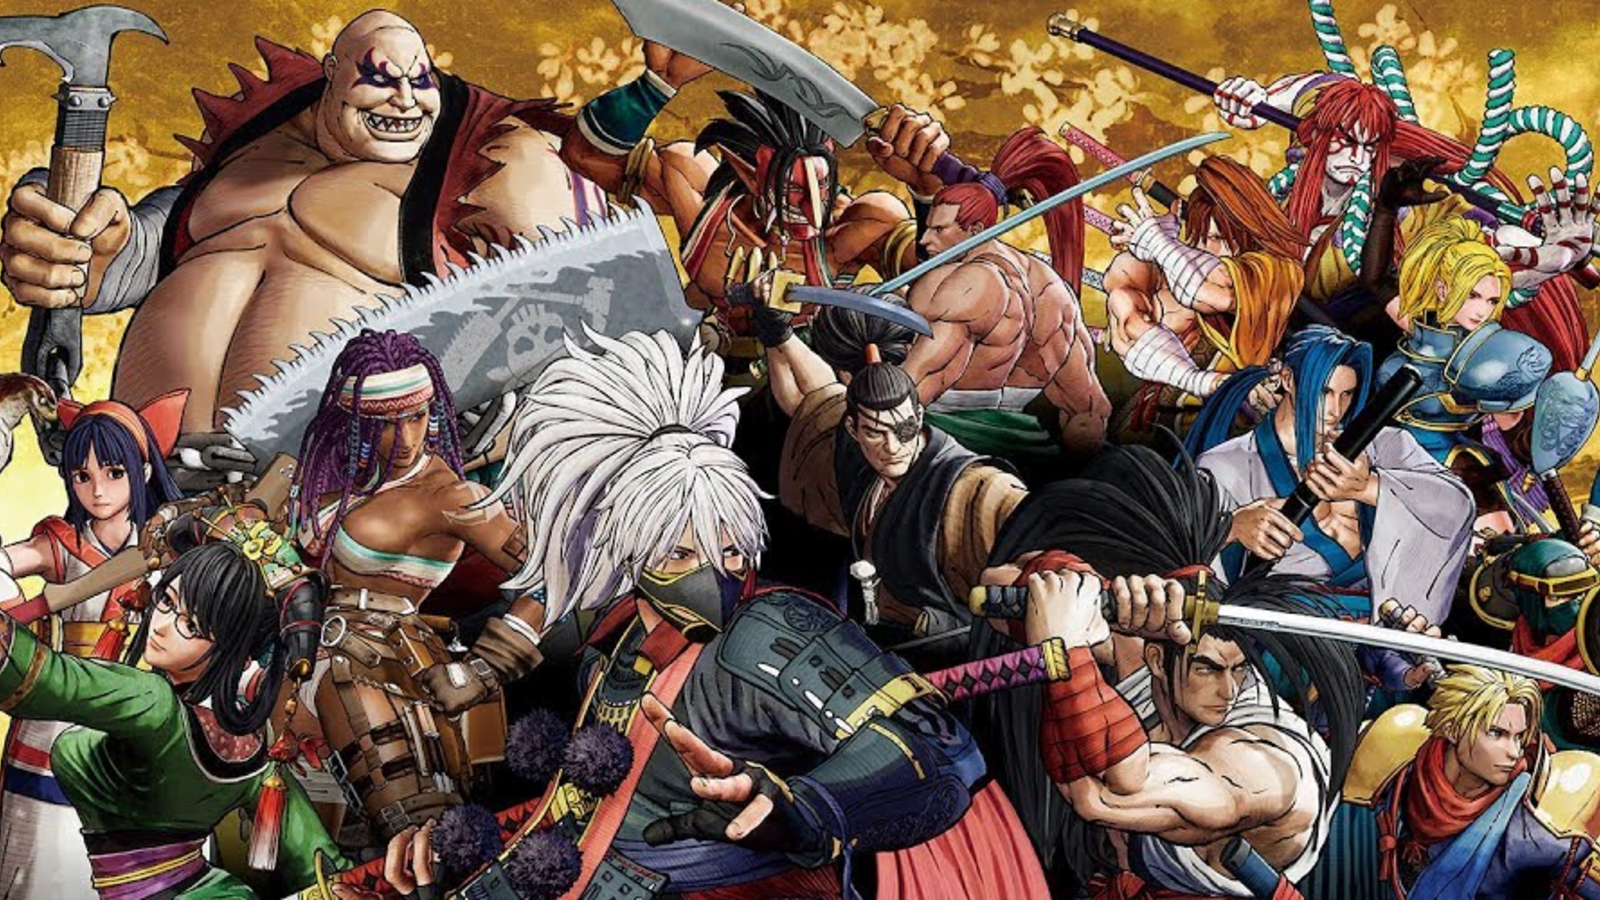 Samurai Shodown Xbox One Version Full Game Free Download